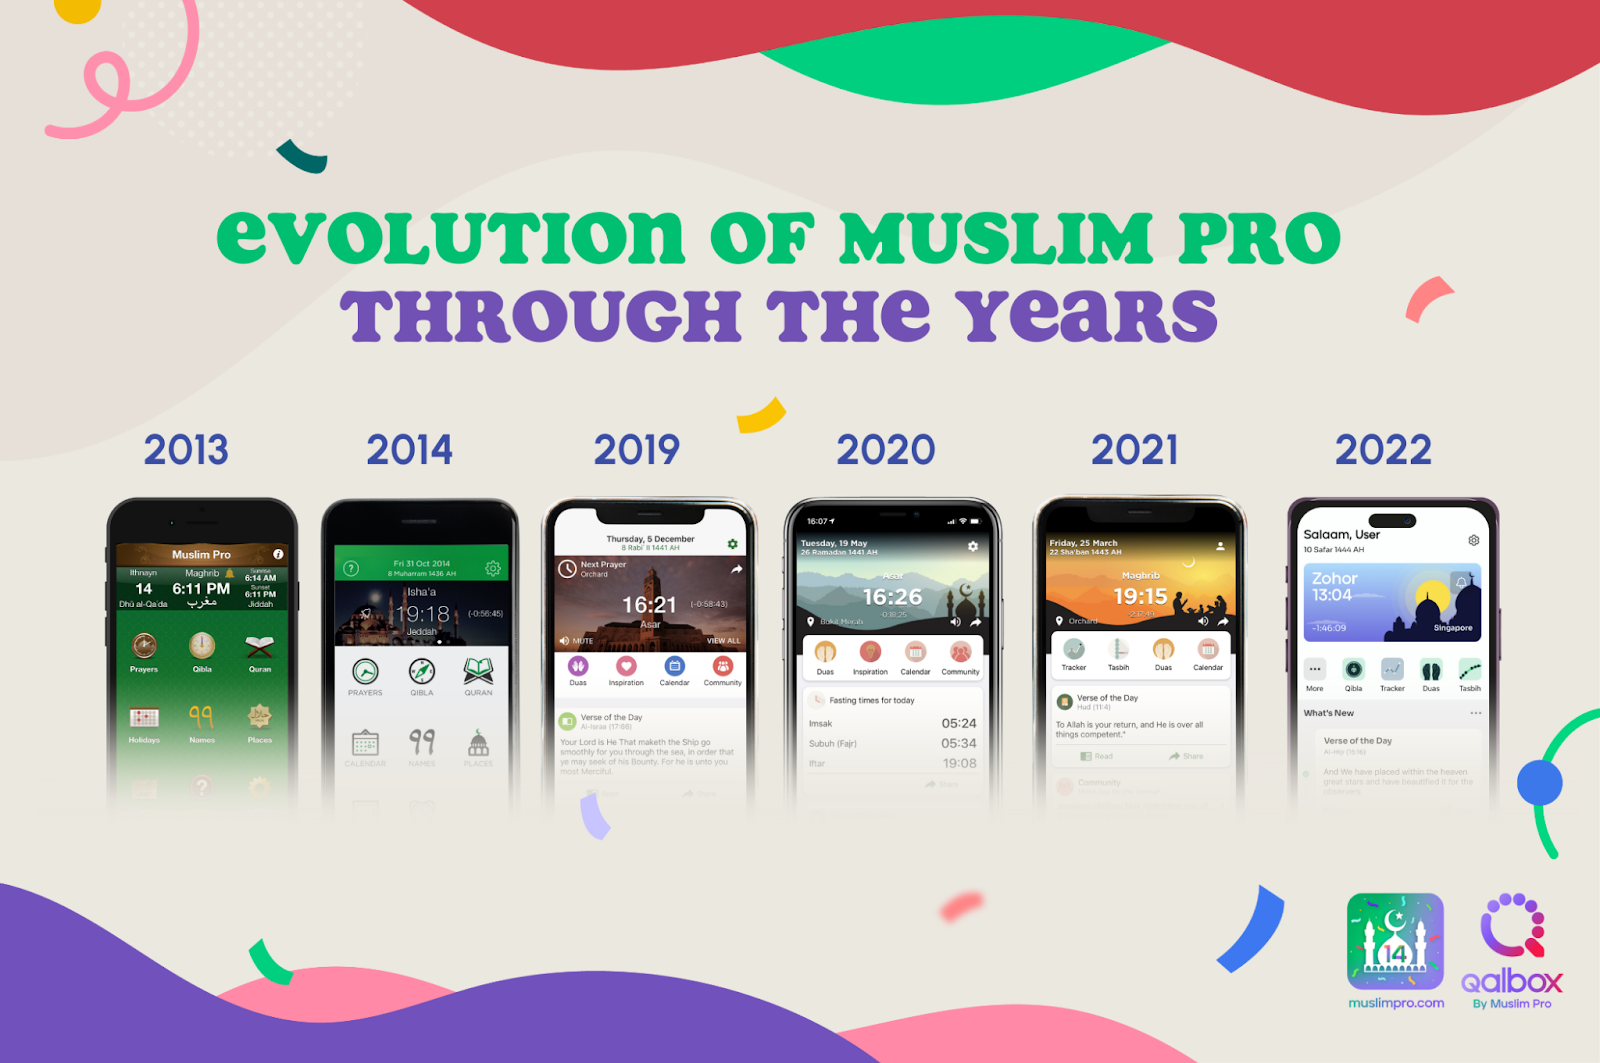 JMB8a0xvMWZ4zLVqEGYybDaaho85 8Wve119KEo4JfgJrBD1VHfQUBFJwqTq Lx QadLVHLnpGhO qOG9FjH9C Anniversary Exclusive: Celebrating 14 Years of Muslim Pro